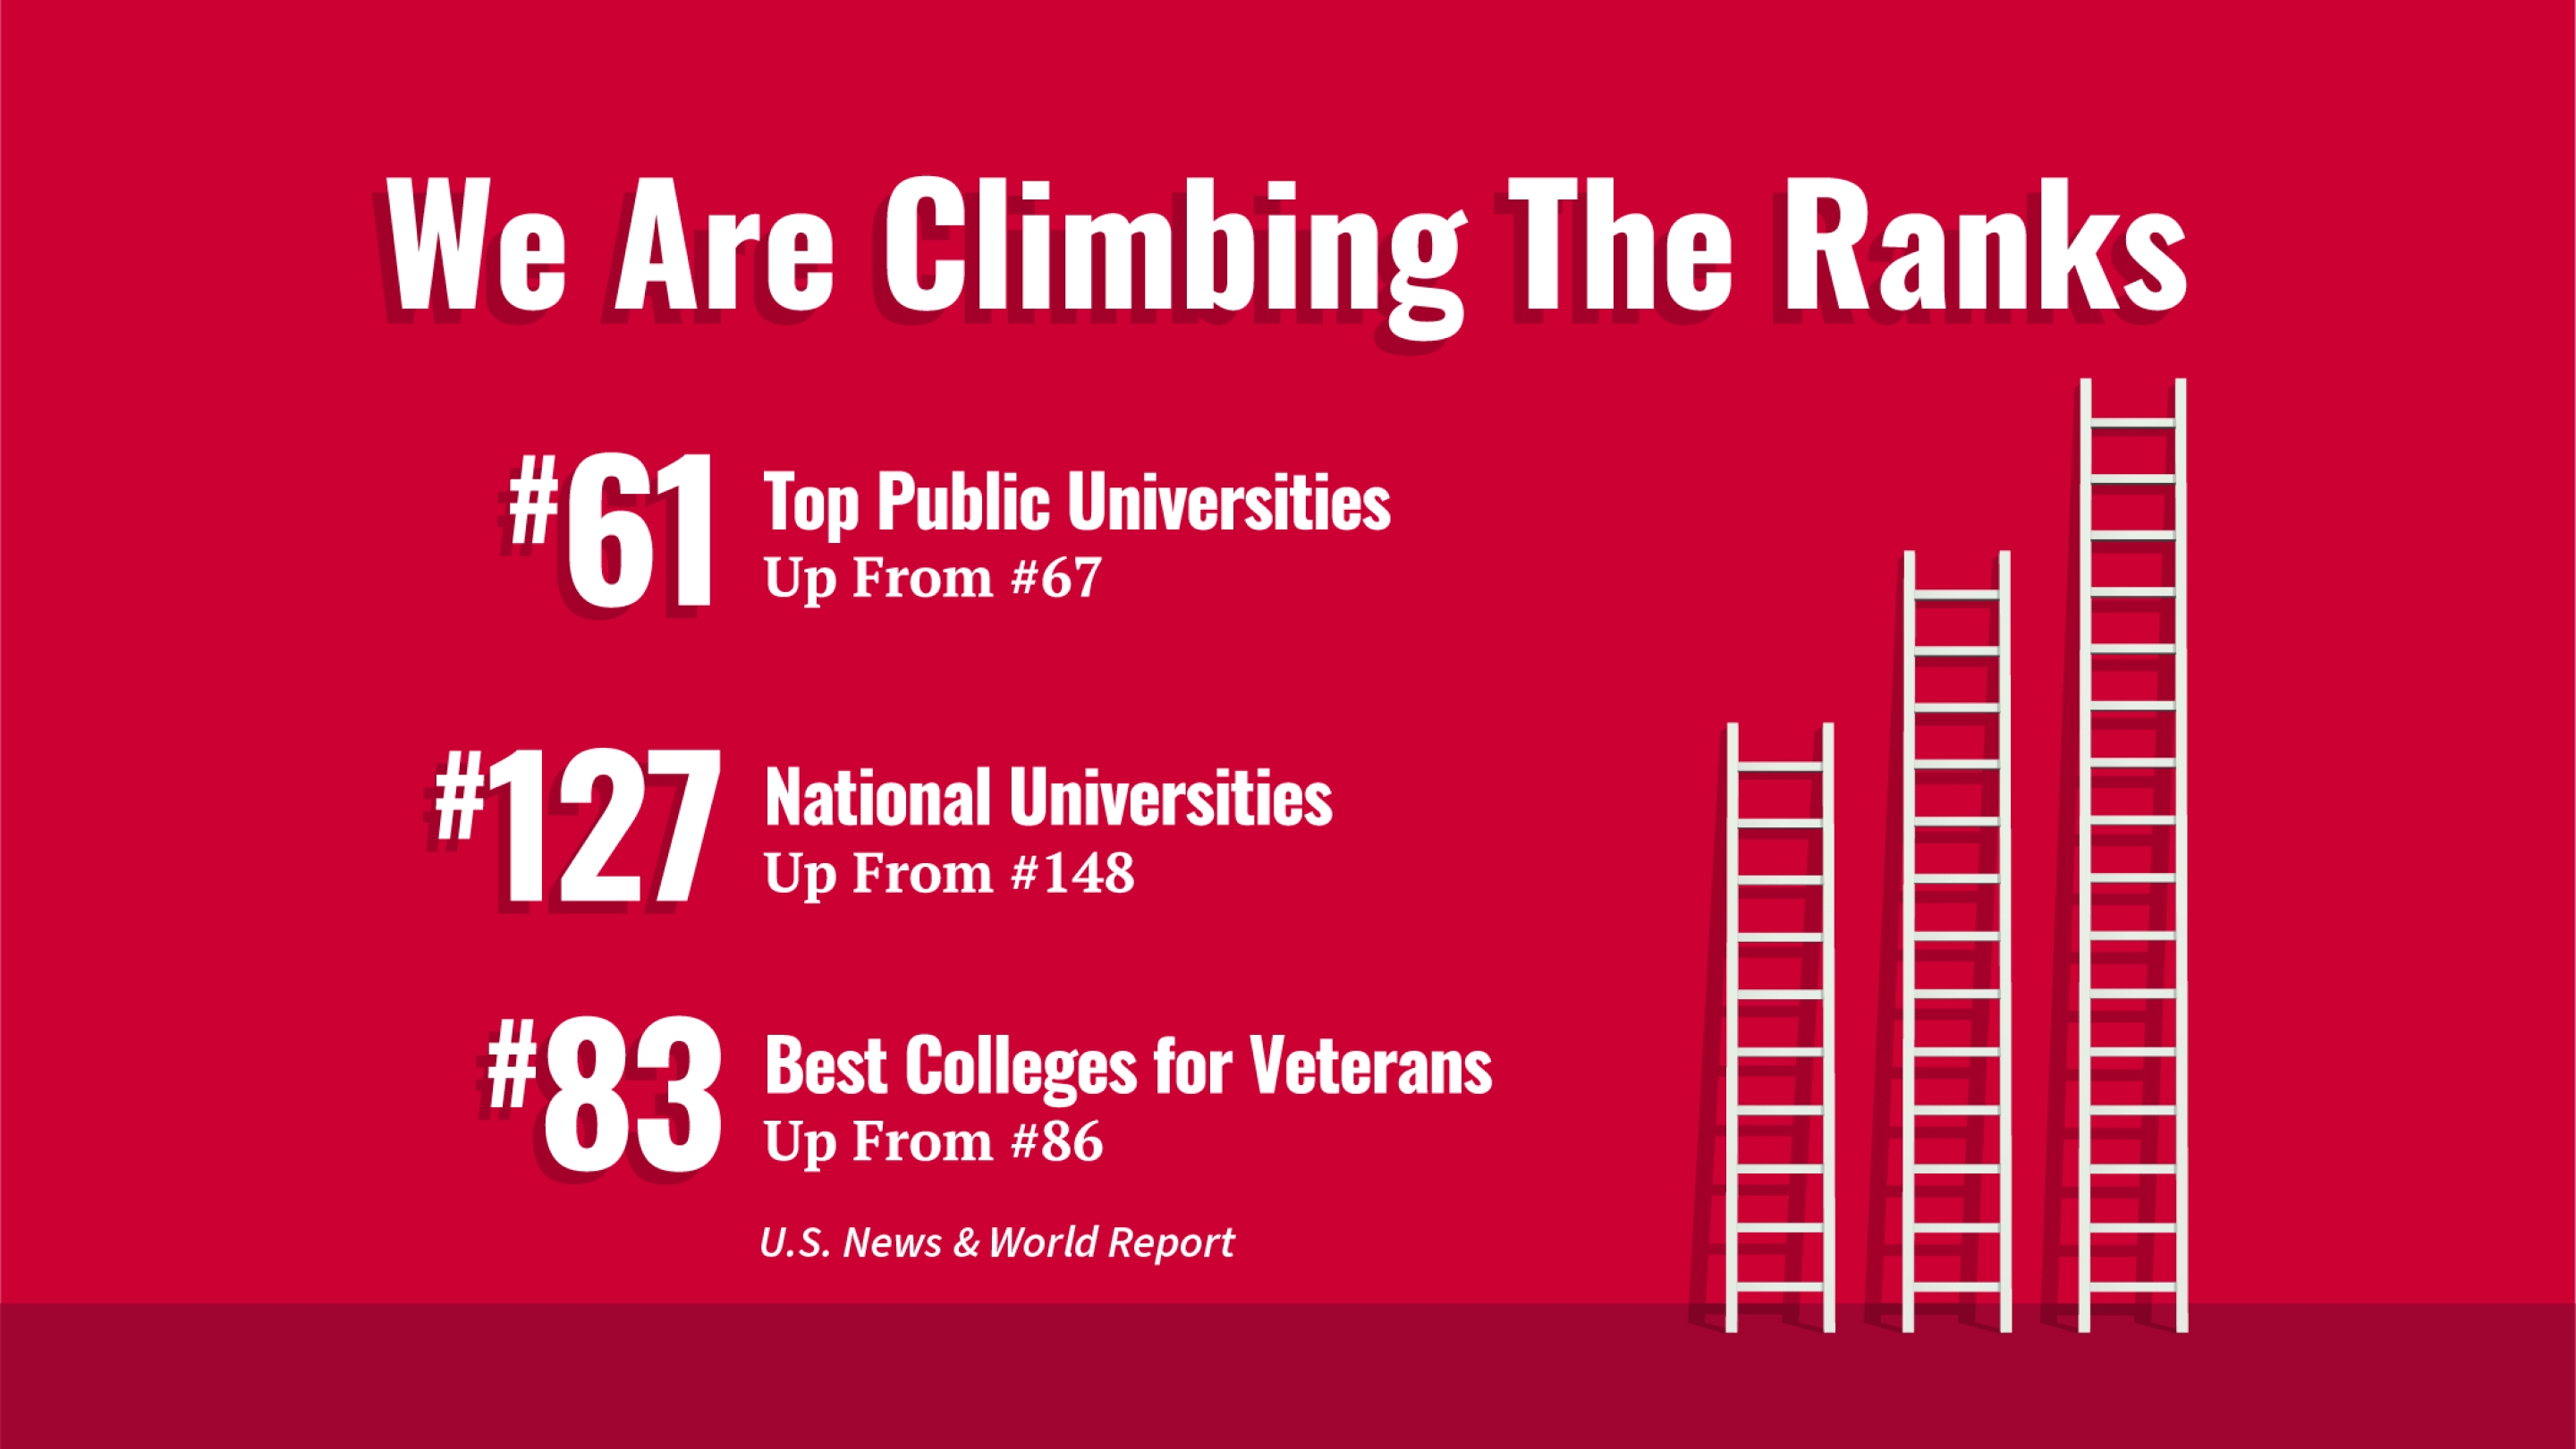 Rutgers UniversityCamden Rises in U.S. News & World Report Rankings